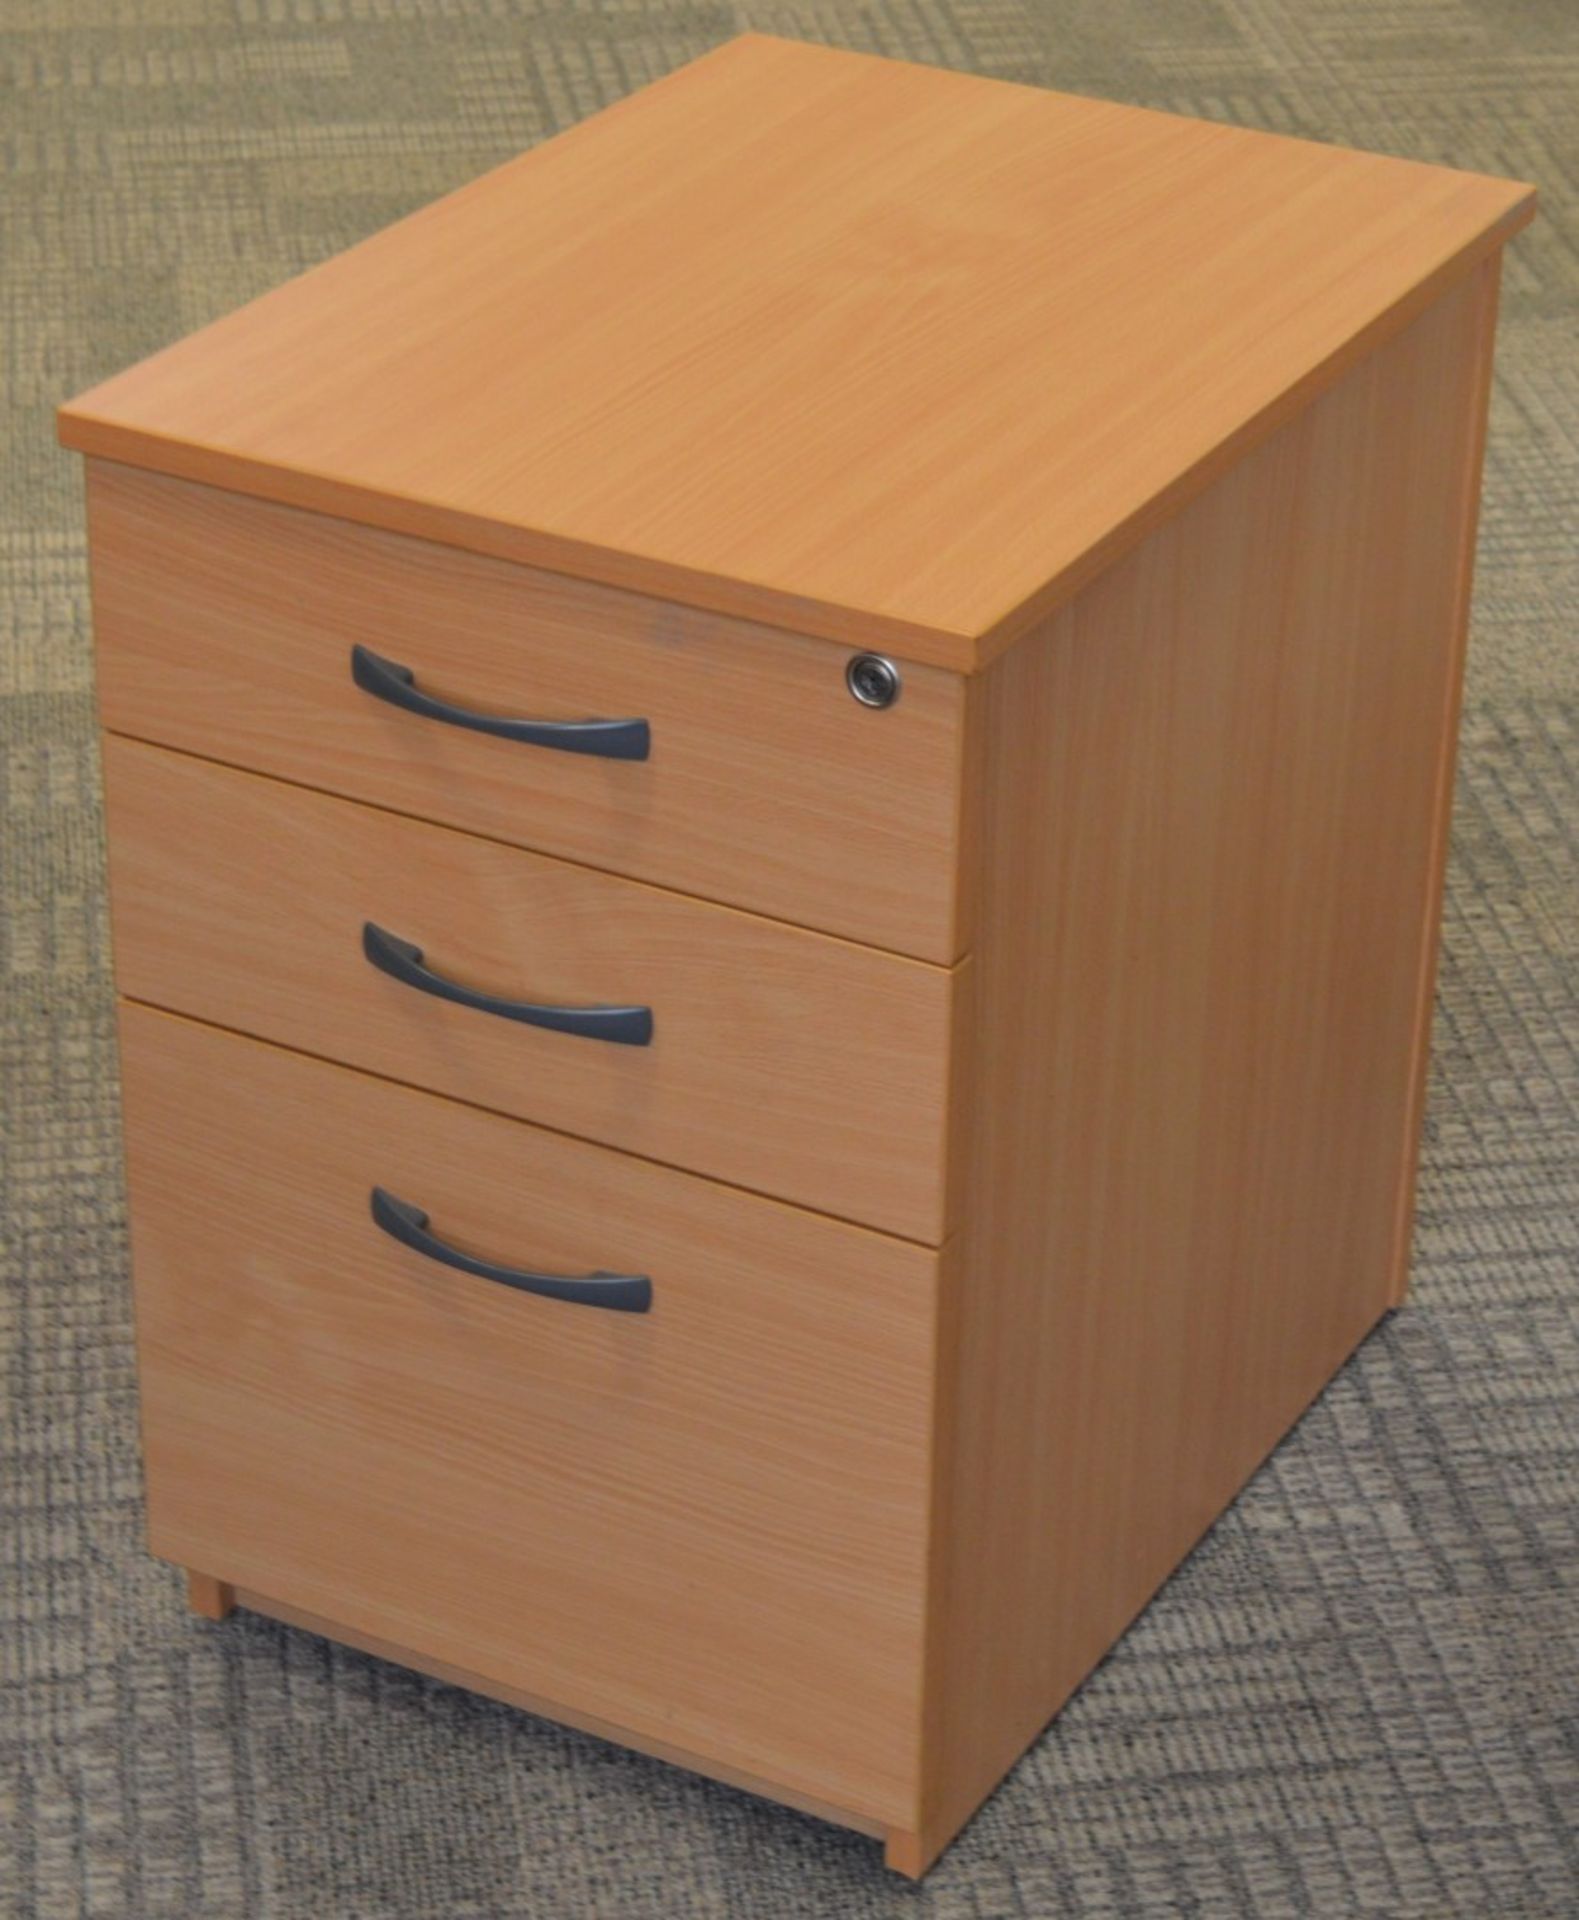 1 x Three Drawer Mobile Pedestal Drawers - With Key - Modern Beech Finish - Two Storage Drawers